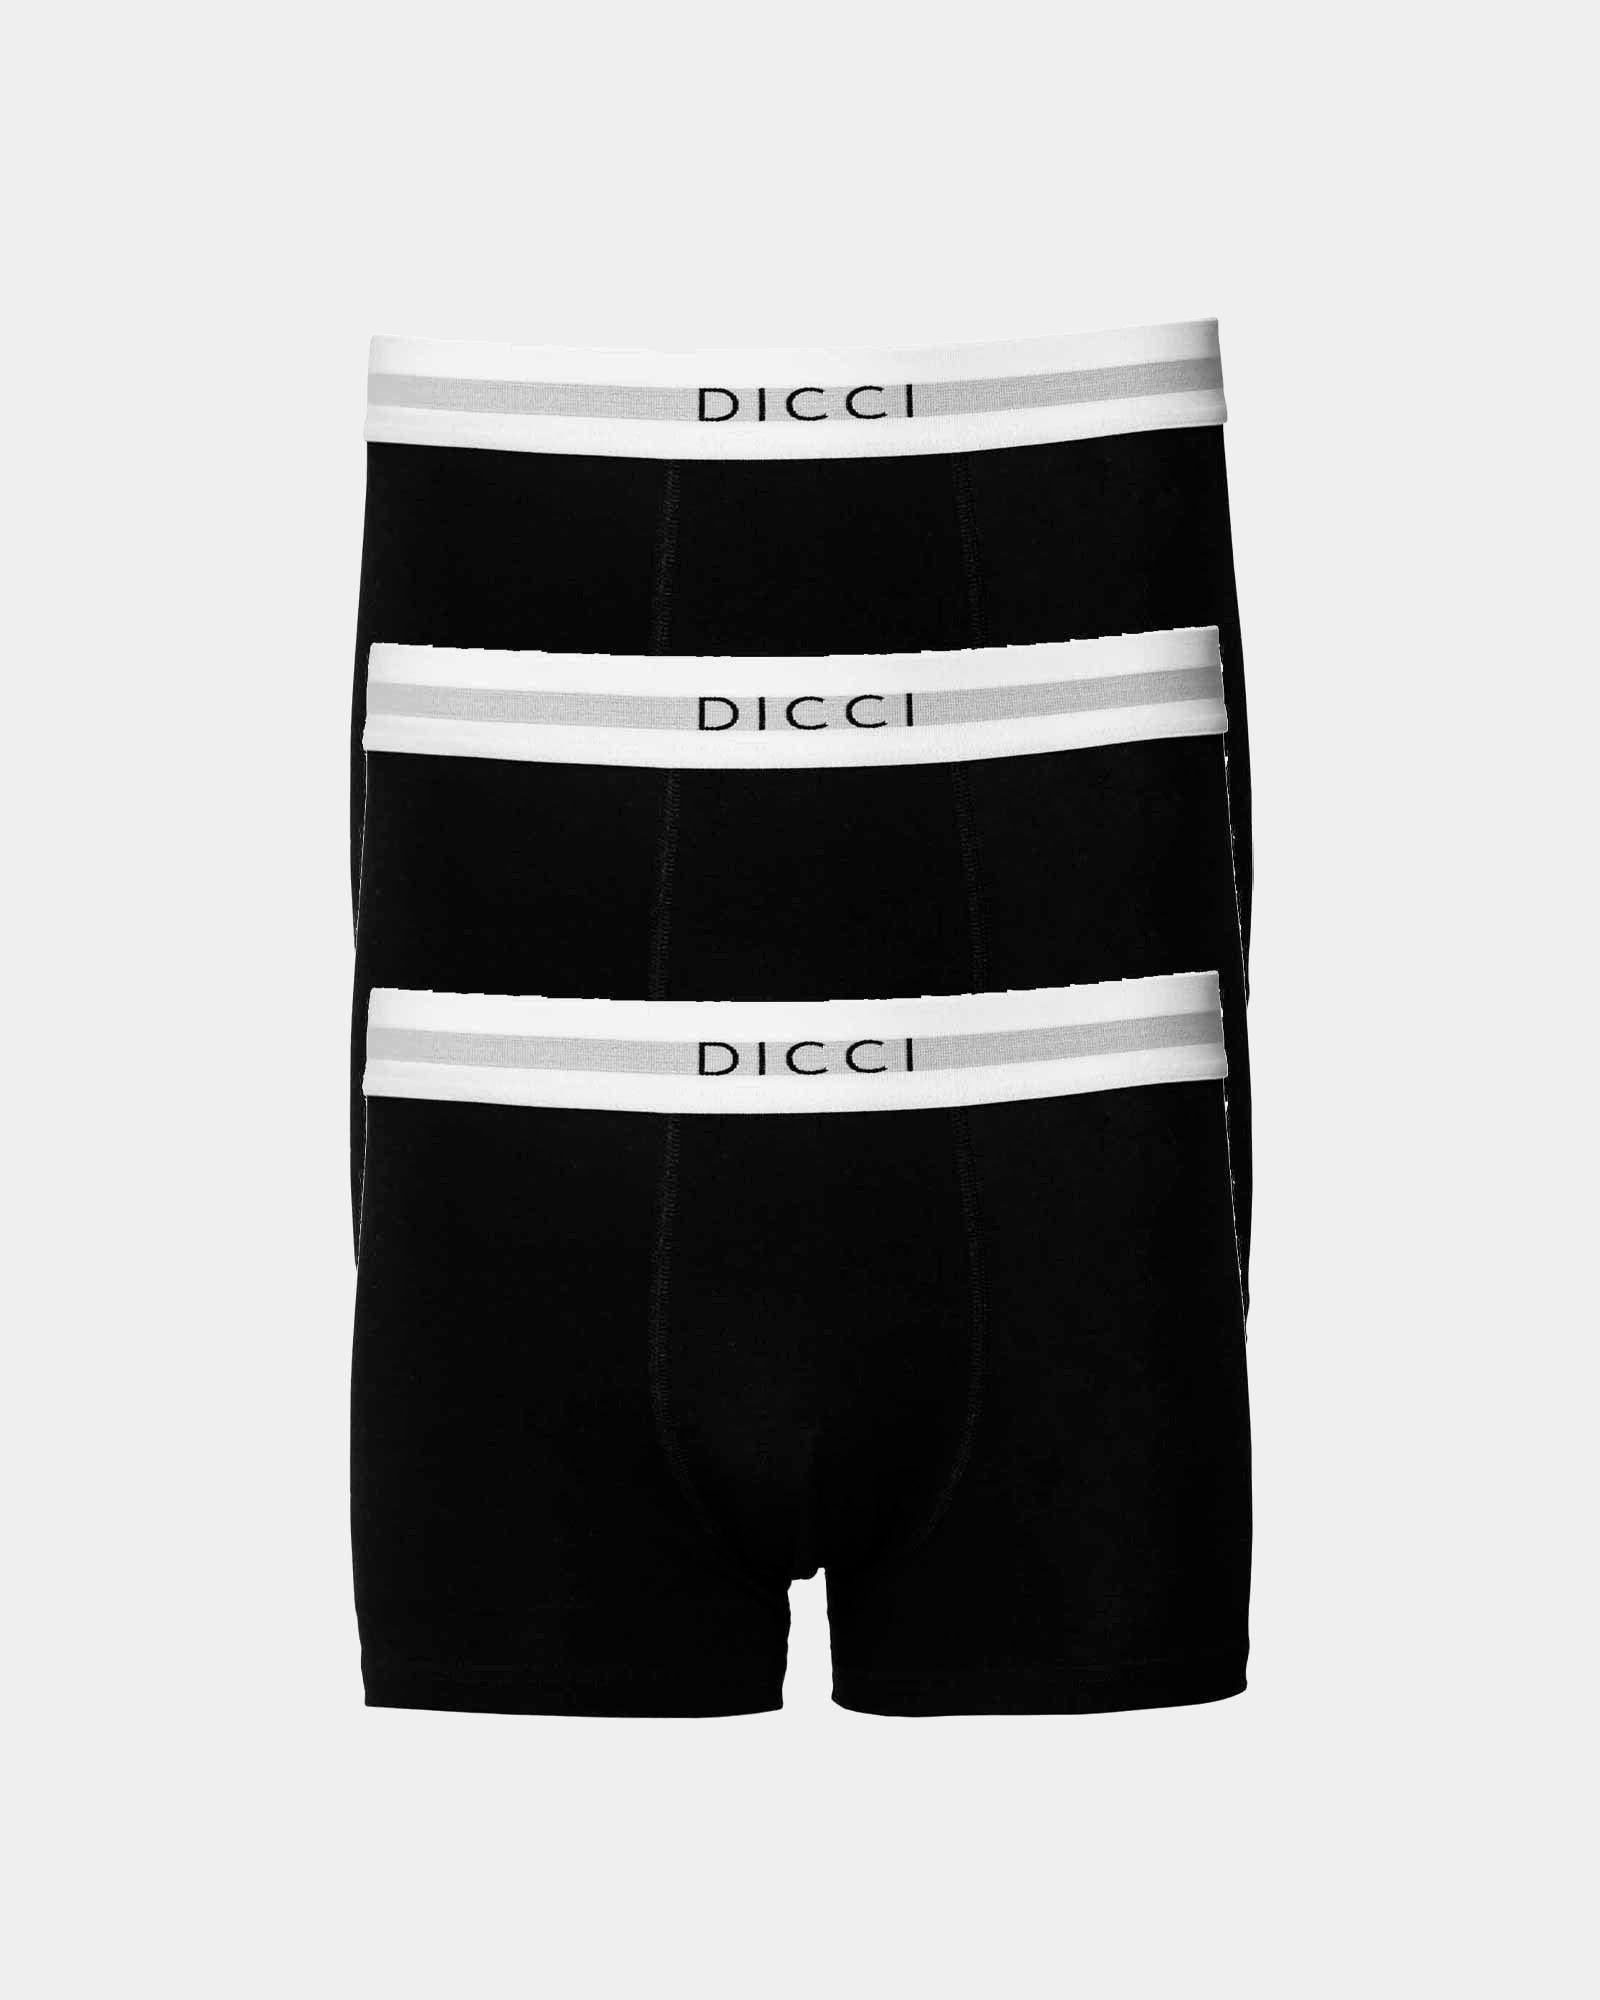 Untitled Underwear playboi carti galaxy Man Underpants Custom Cute Trunk  Hot Boxer Brief Plus Size